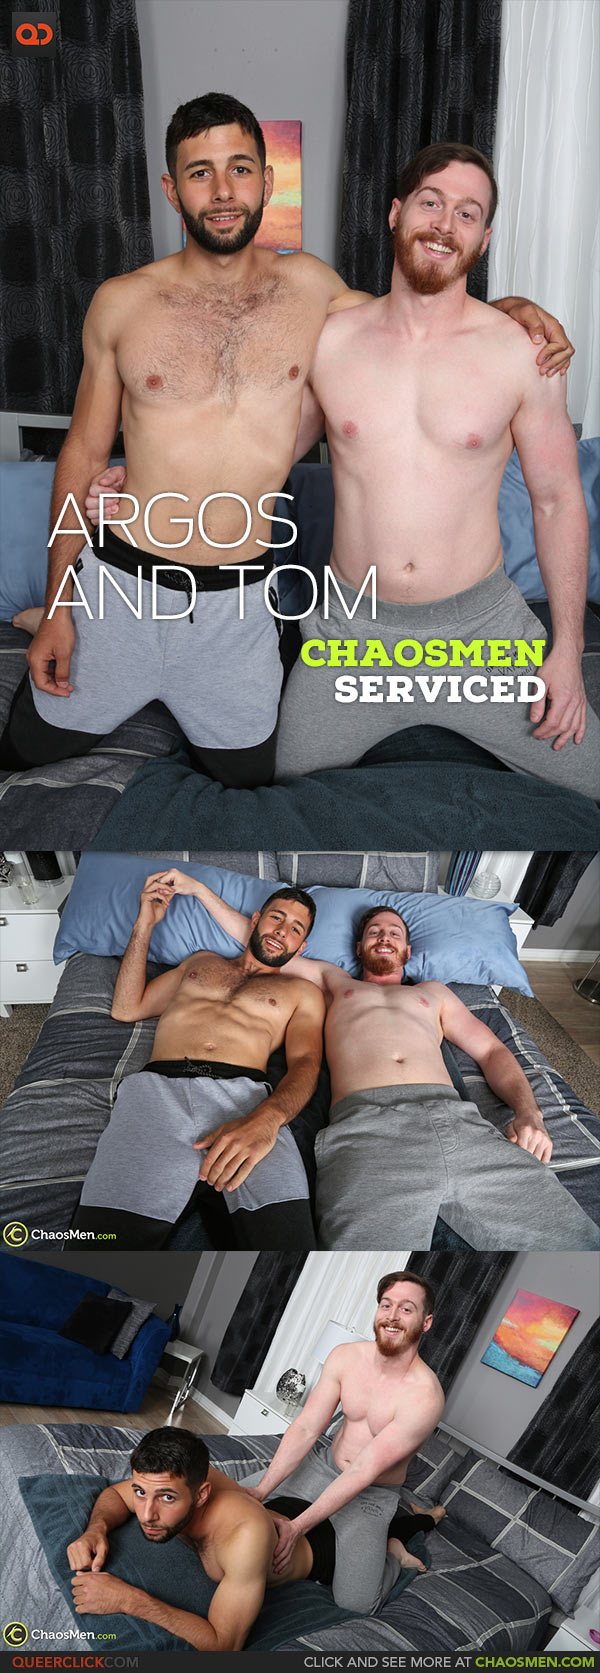 ChaosMen: Argos and Tom Bradley - Serviced